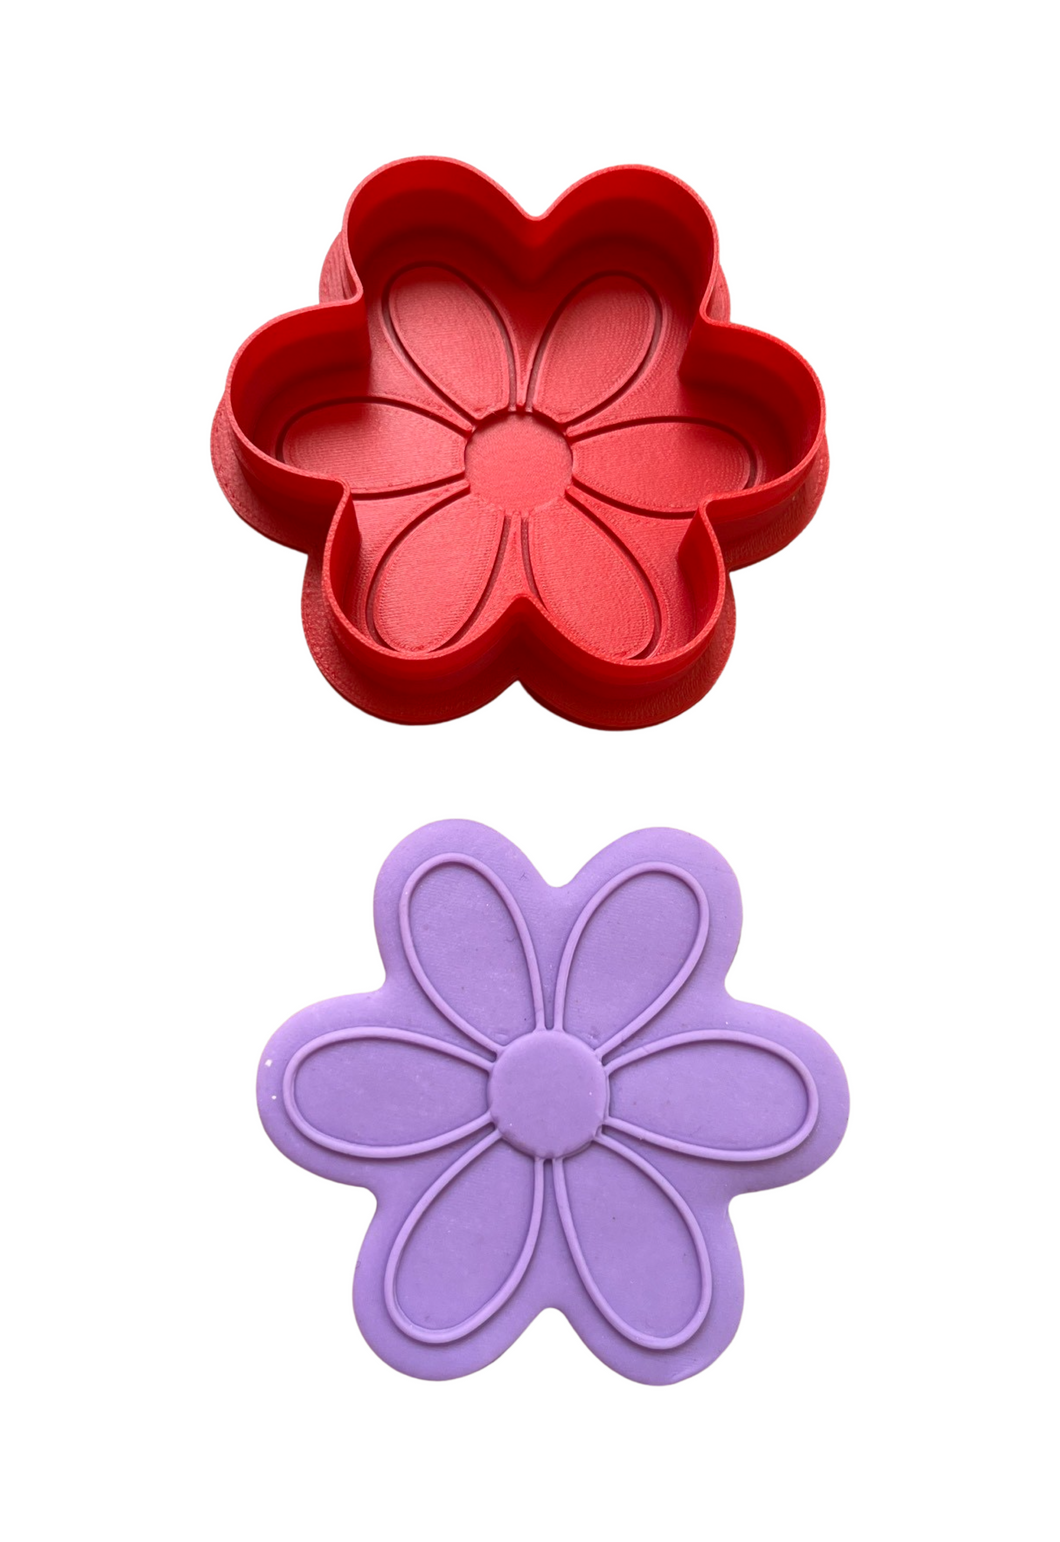 Flower cookie cutter stamp daisy